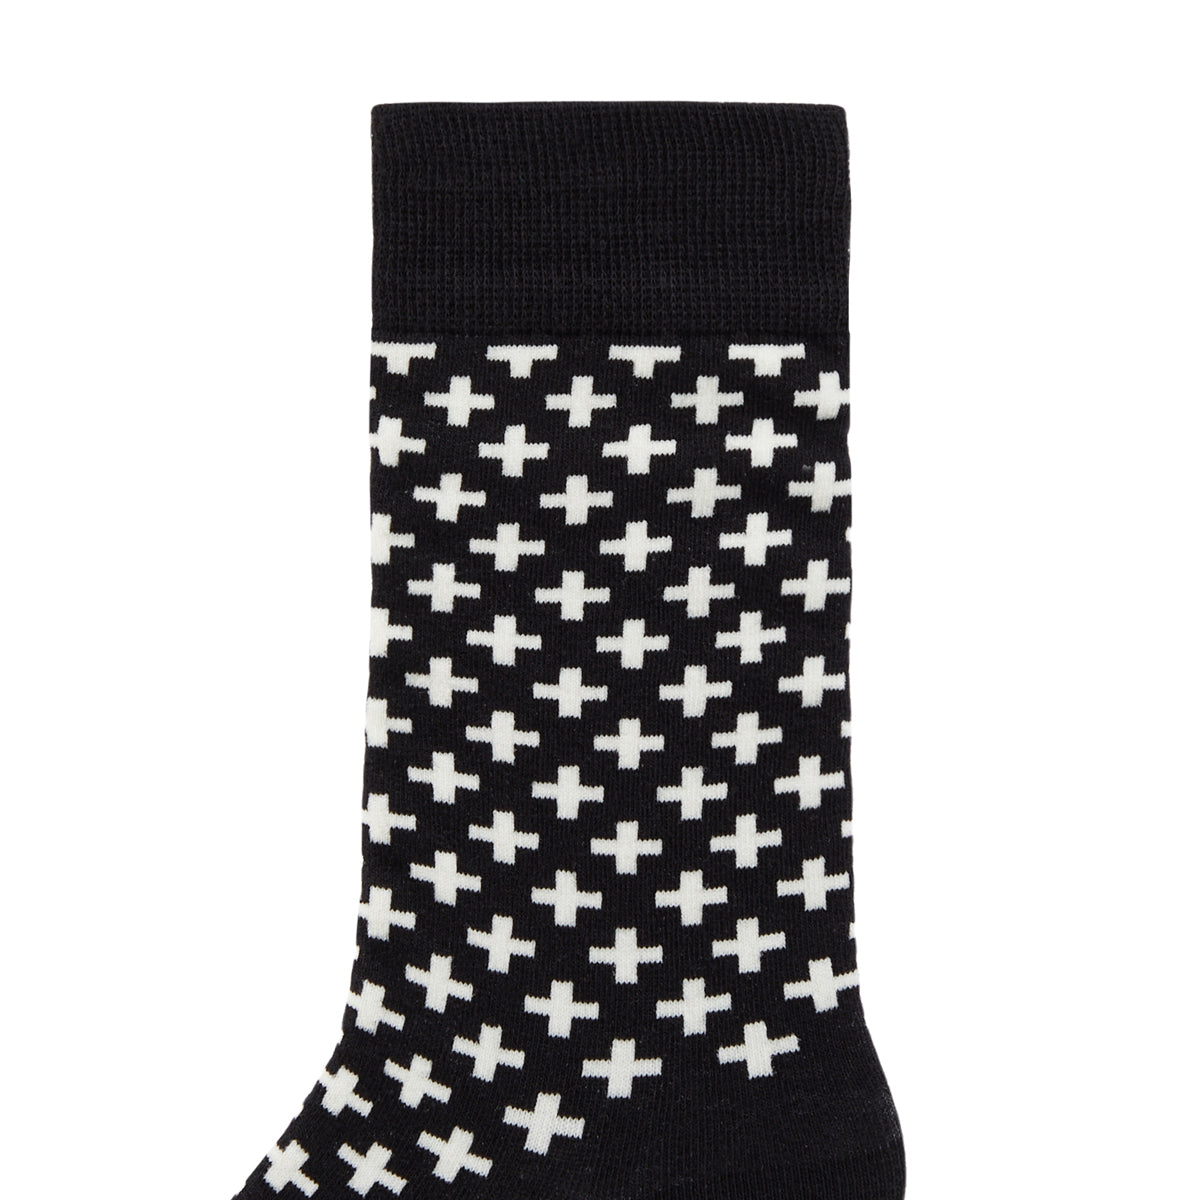 Asterisk Printed Crew Length Socks - IDENTITY Apparel Shop